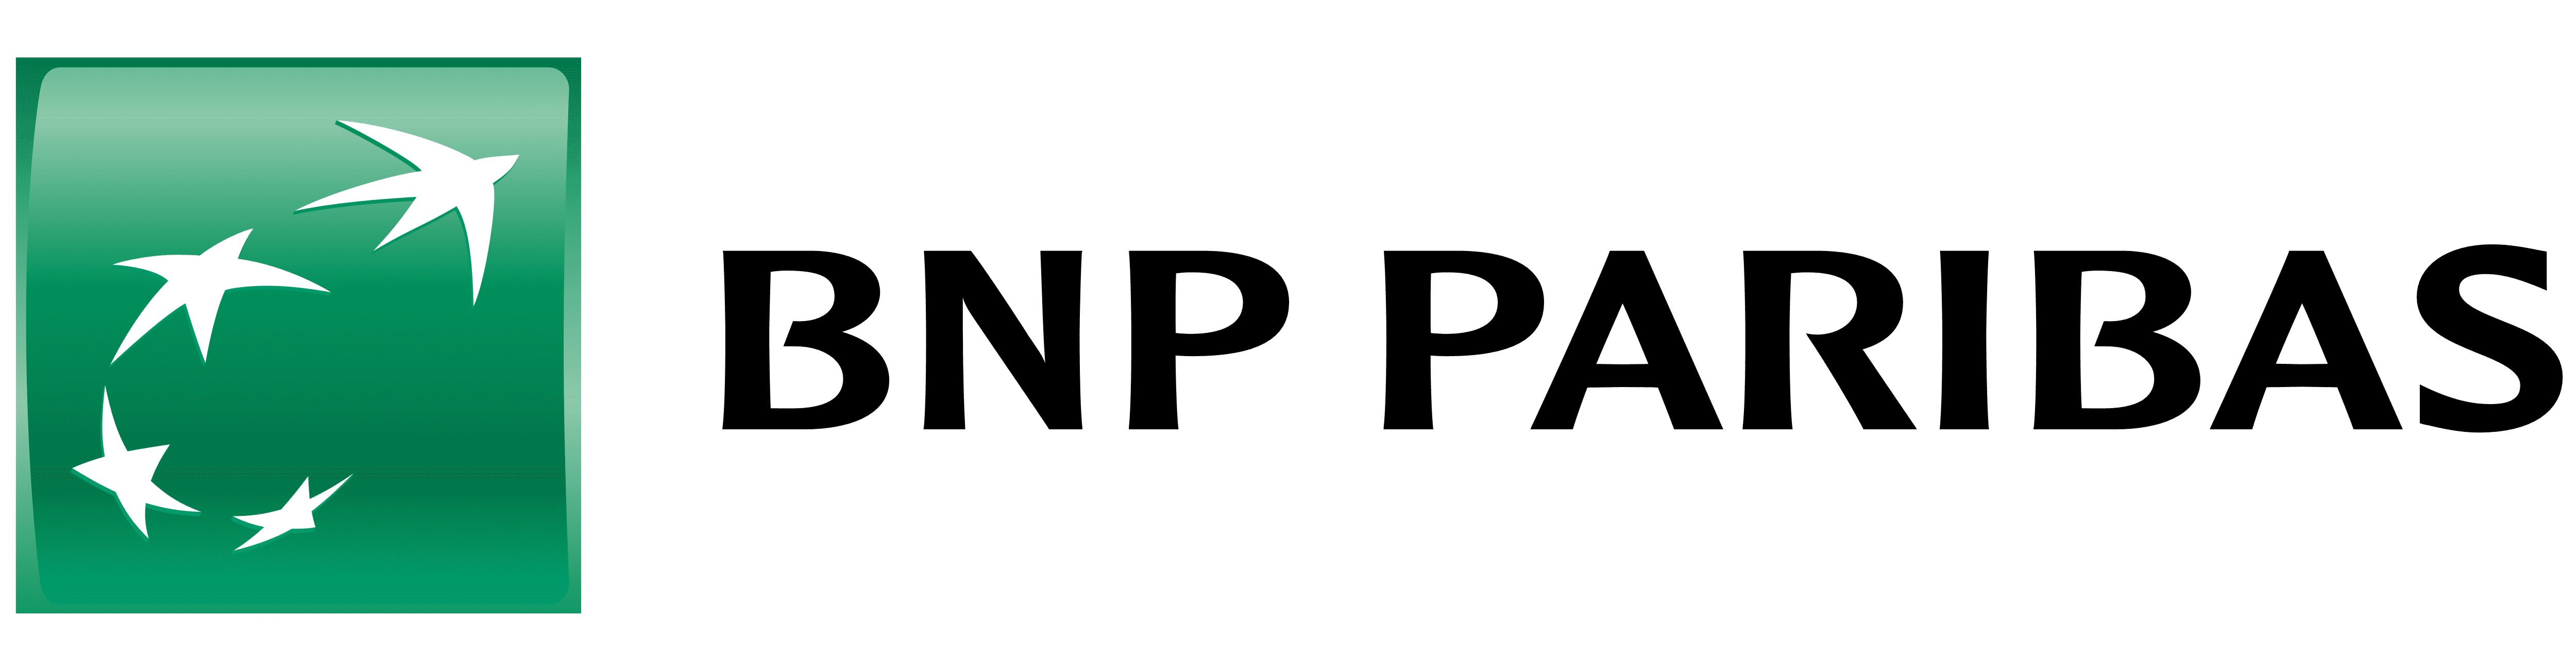 logo de la banque BNP Paribas